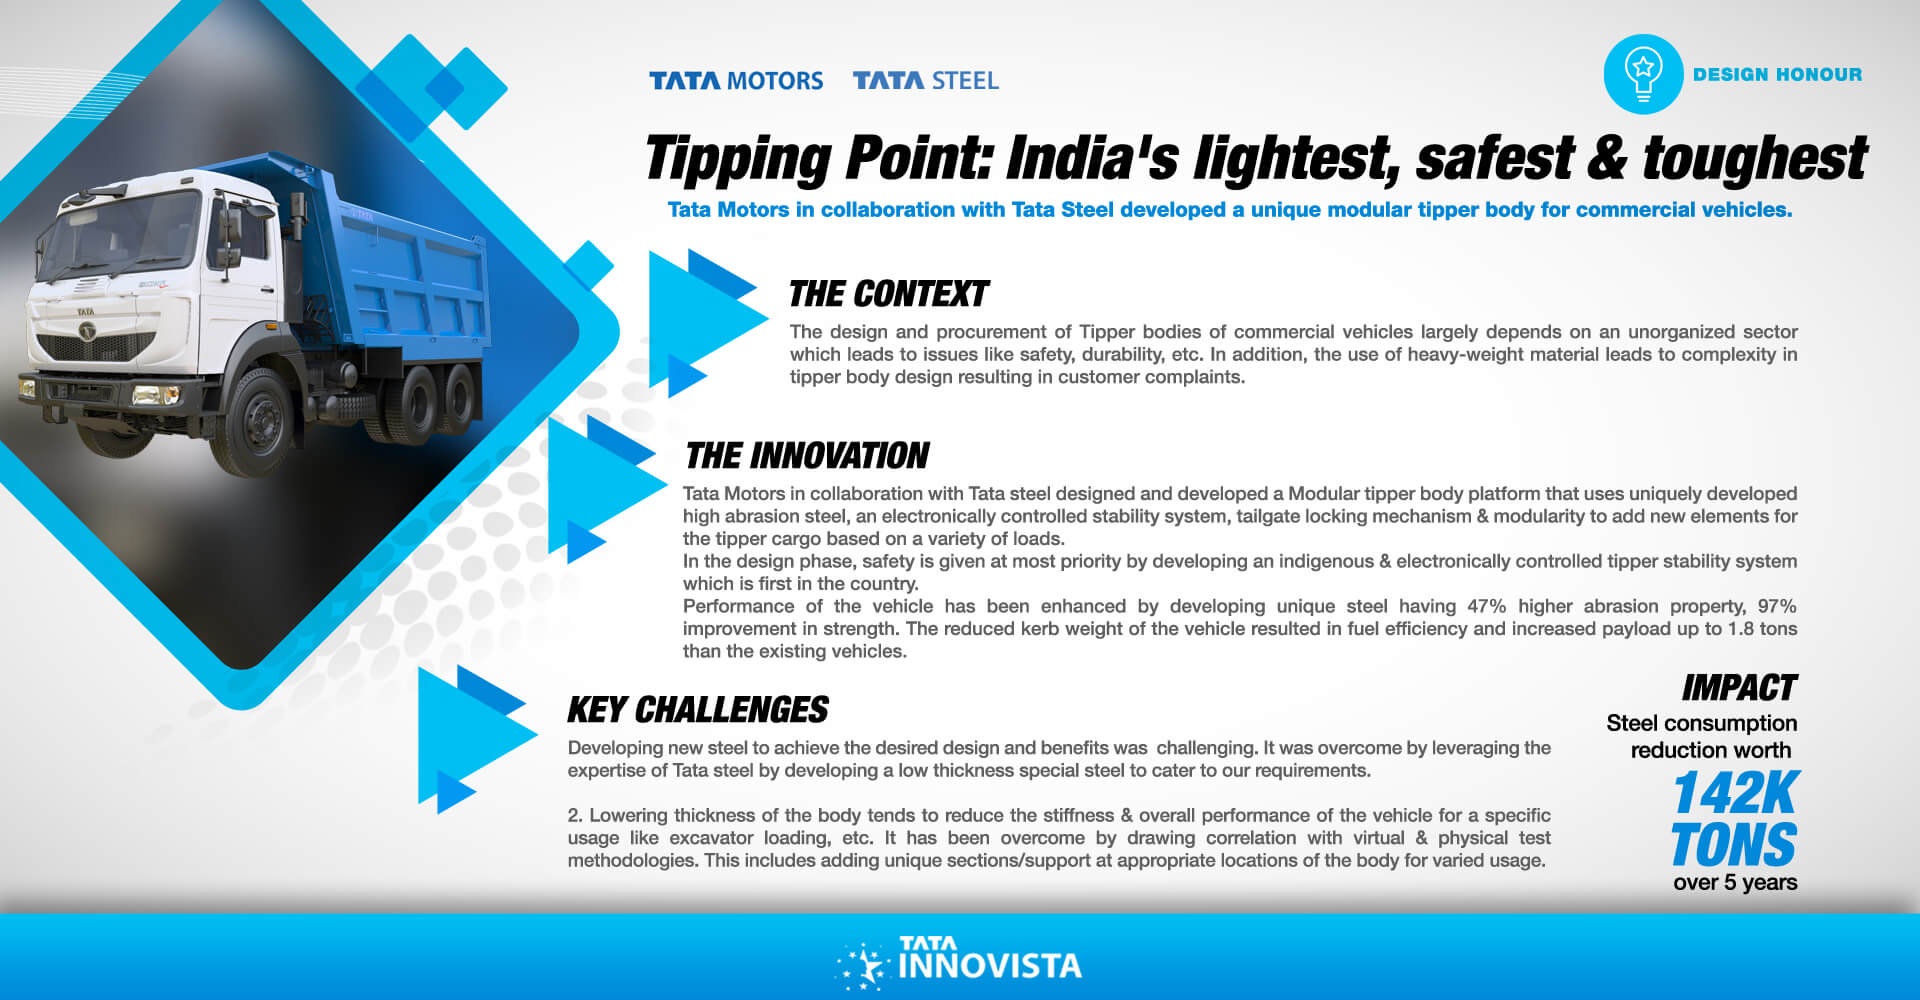 Tipping Point: India's lightest, safest & toughest